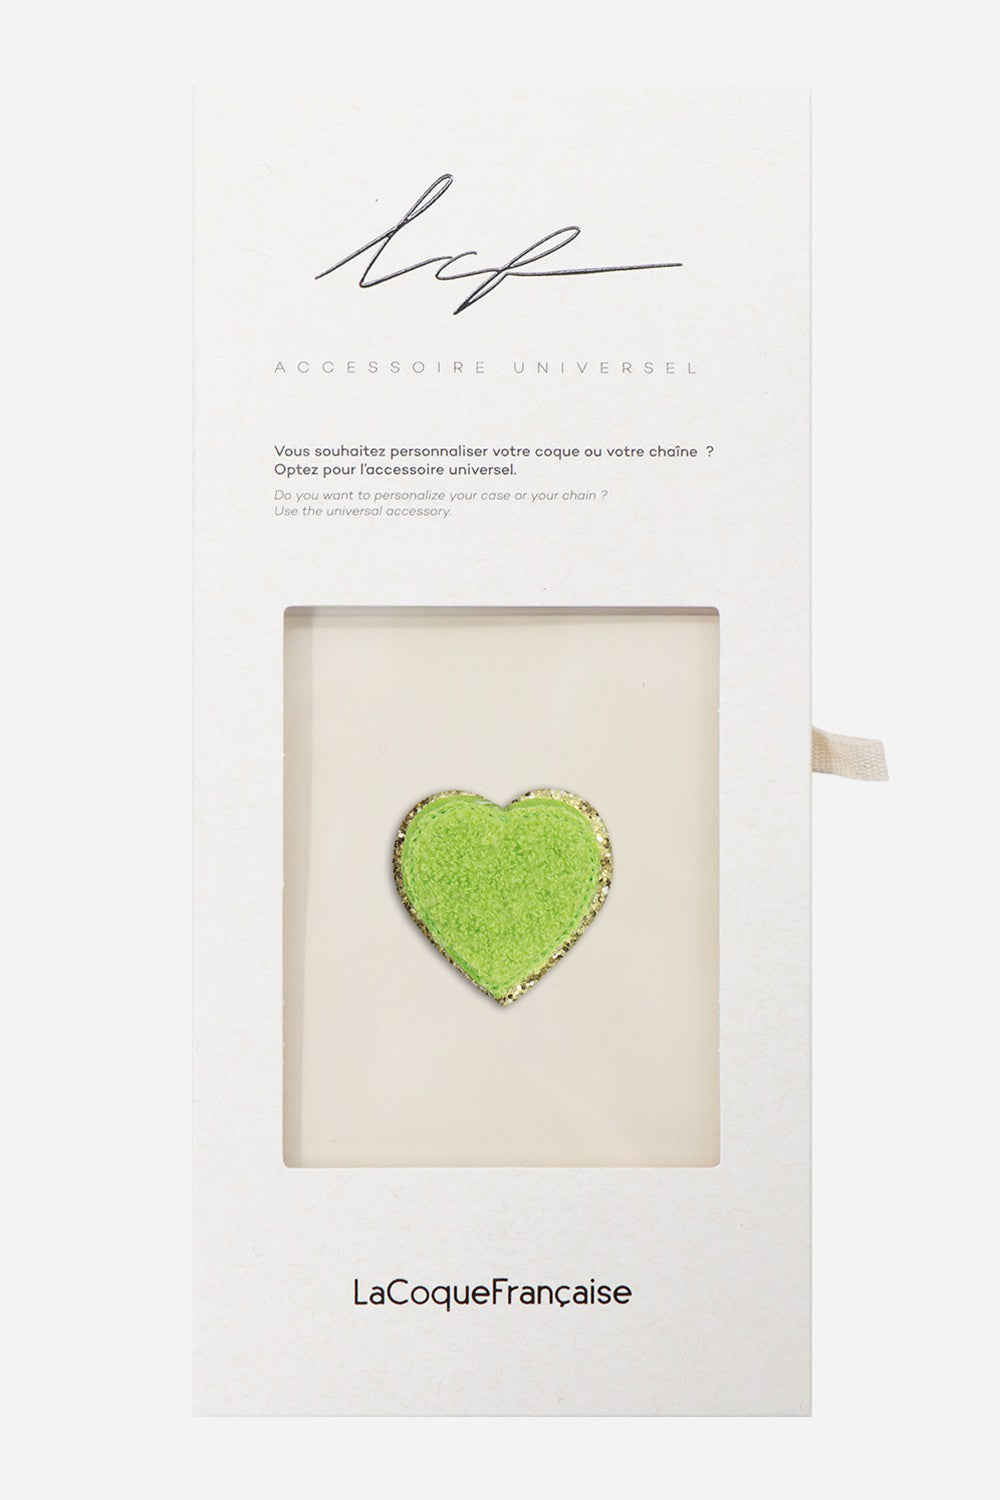 Green Heart Patch